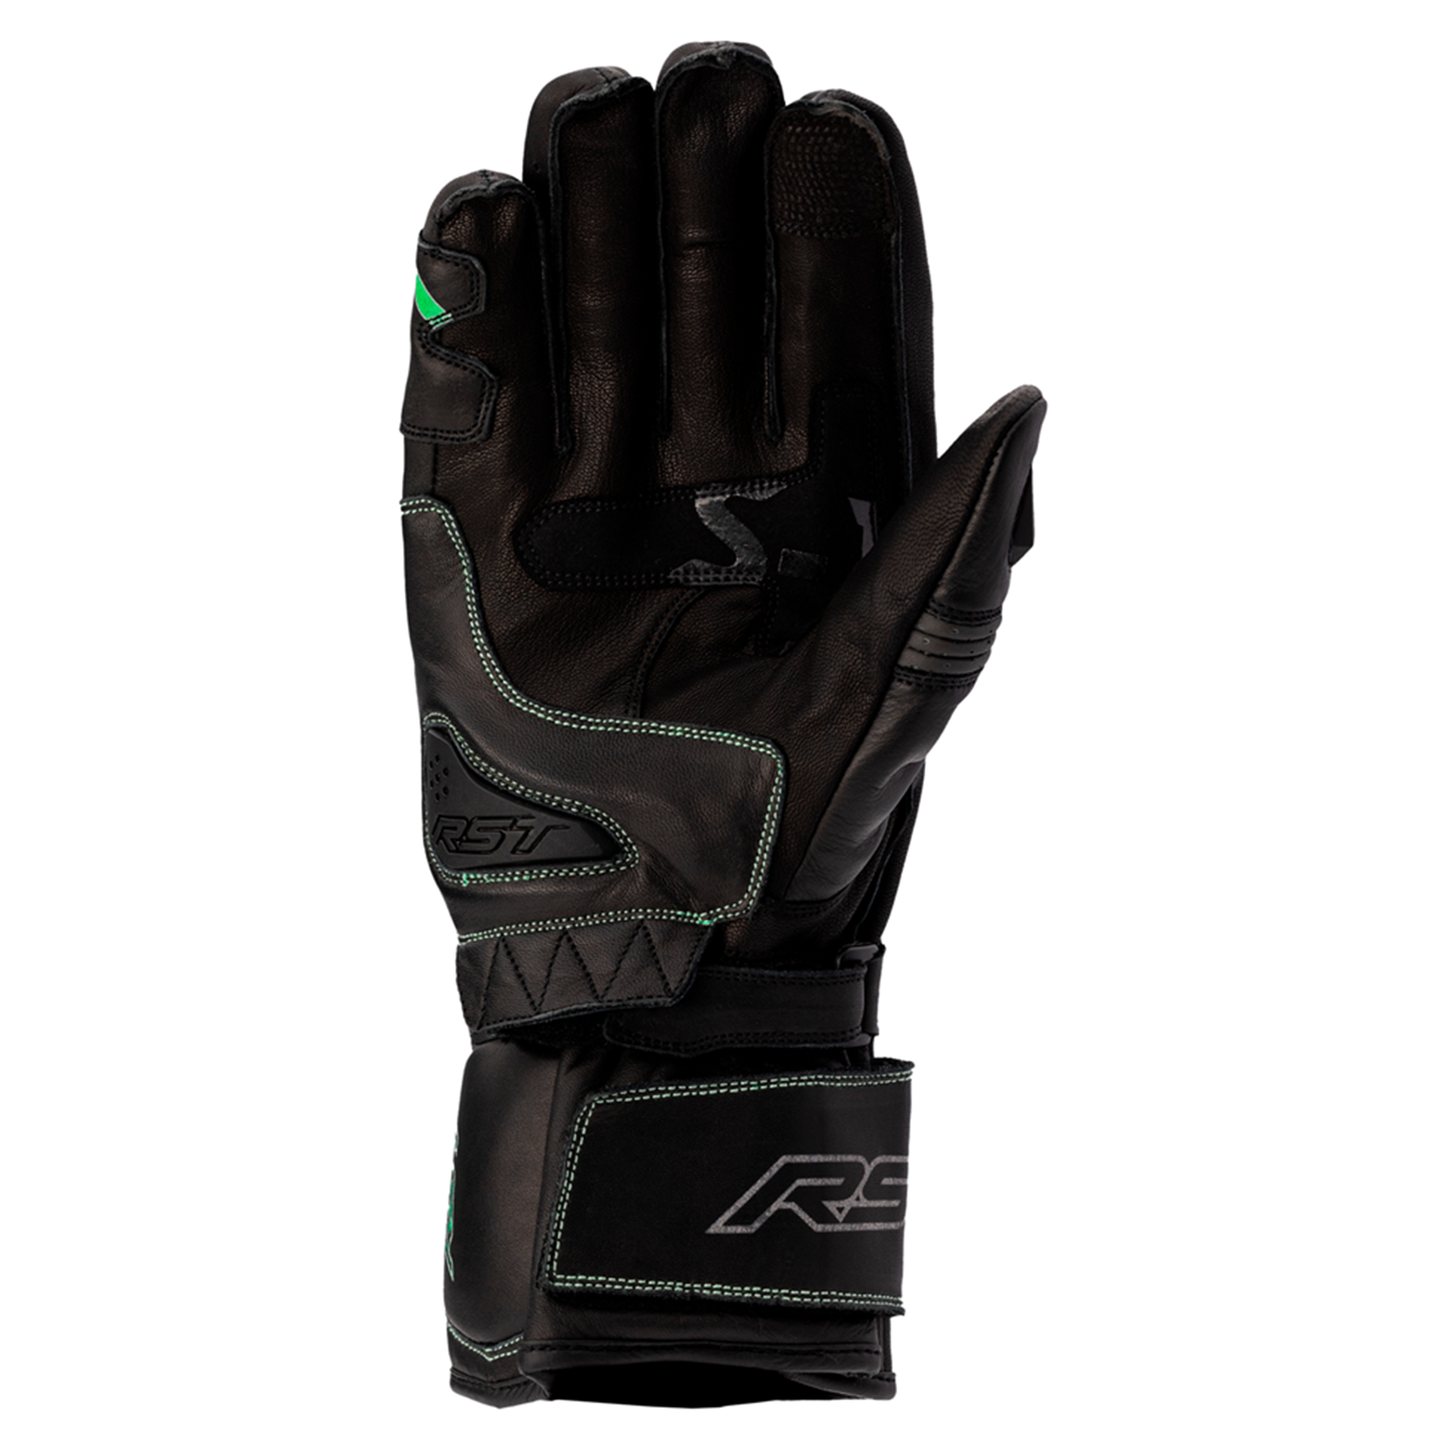 RST S1 CE Men's Gloves - Black/Grey/Neon Green (3033)